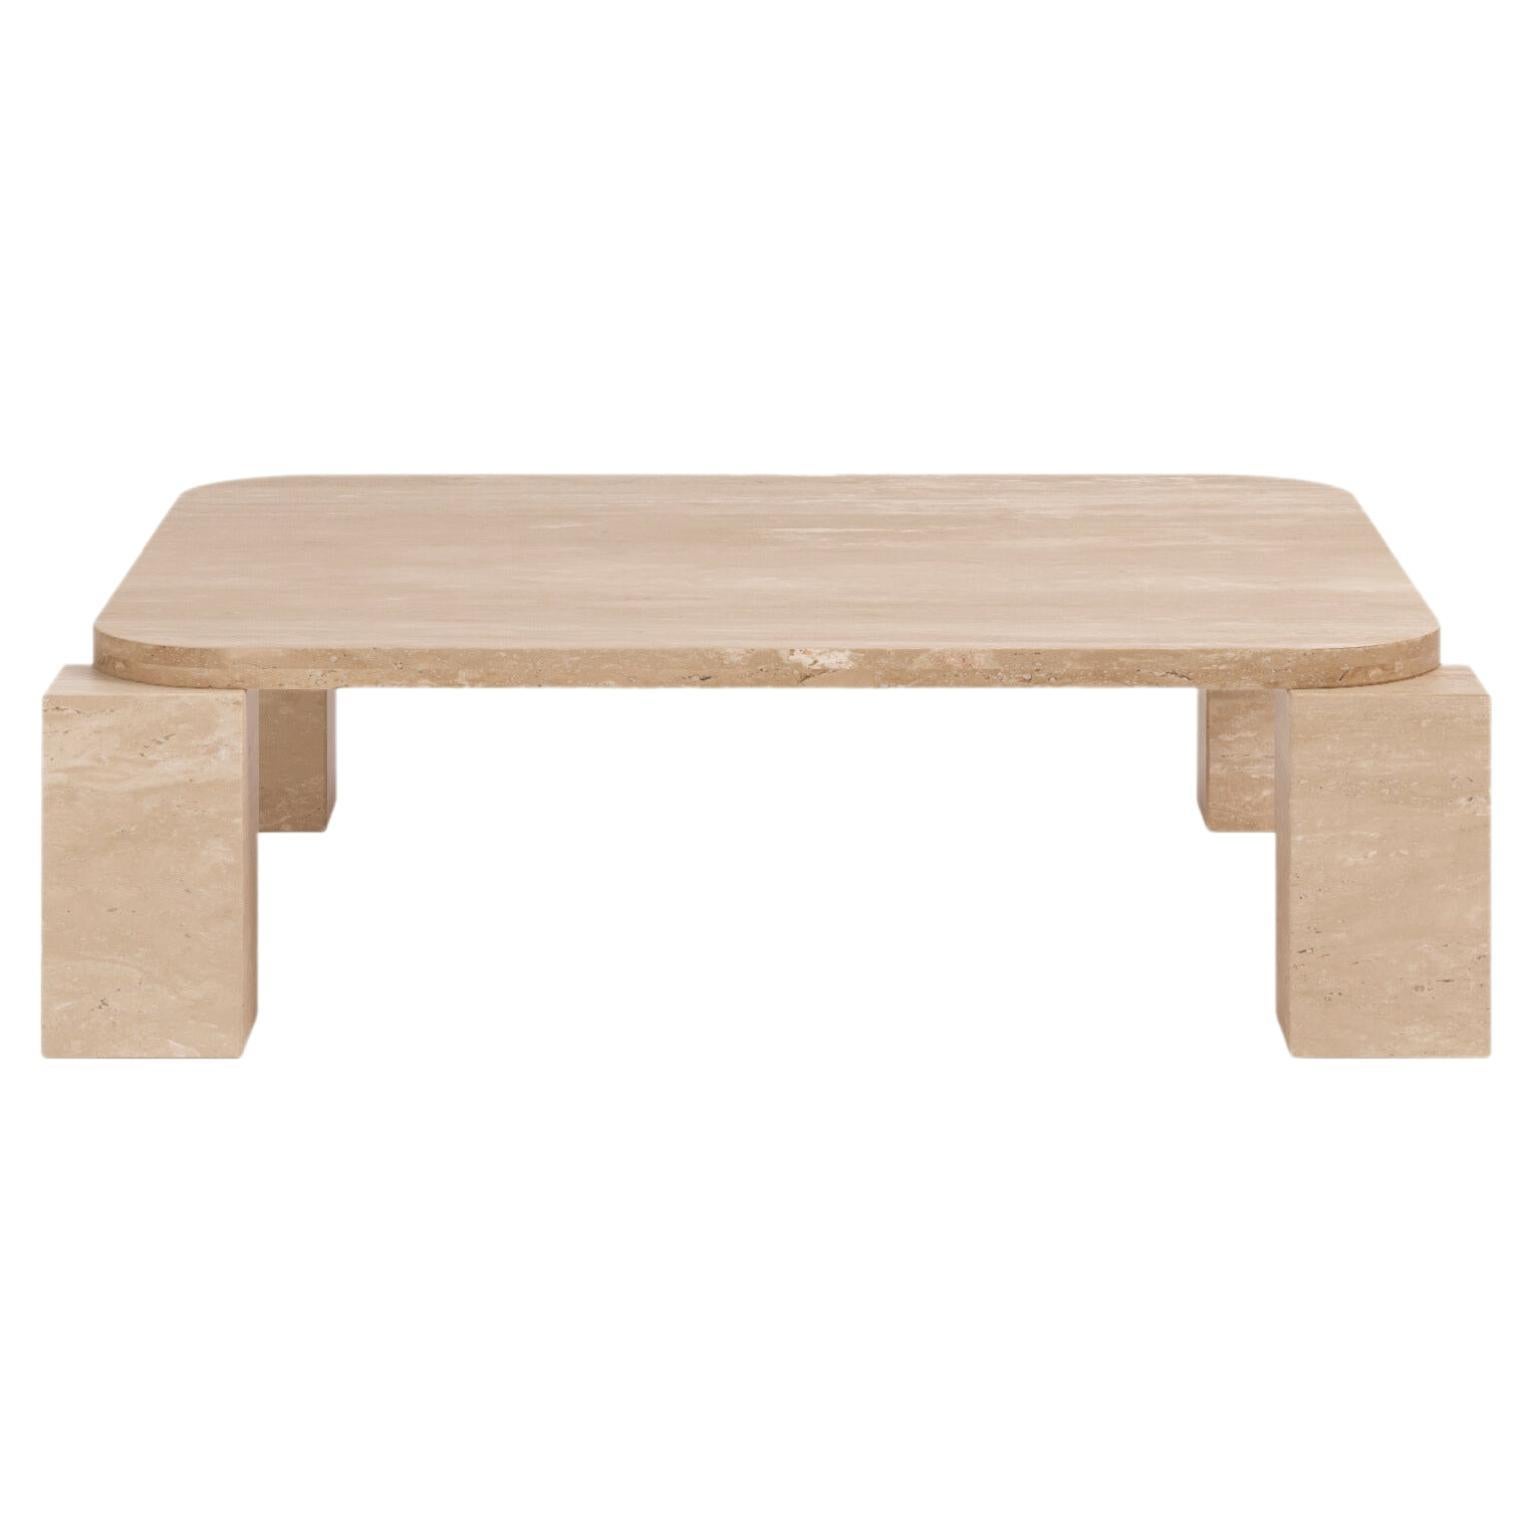 FORM(LA) Table basse carrée Cubo 62L x 62 "L x 14H Travertino Crema VC